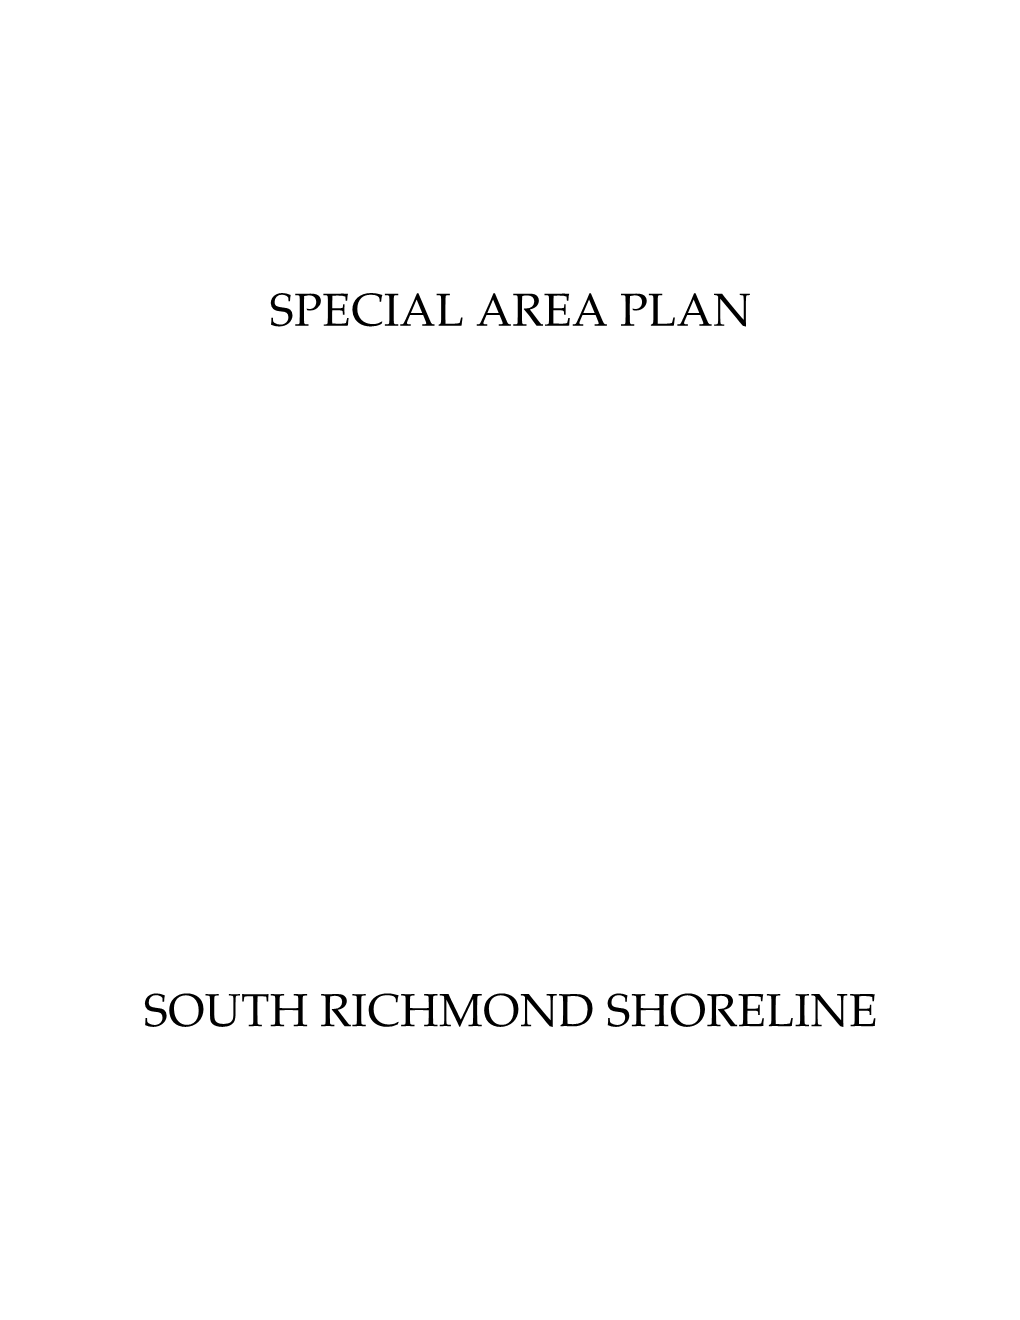 South Richmond Shoreline Special Area Plan